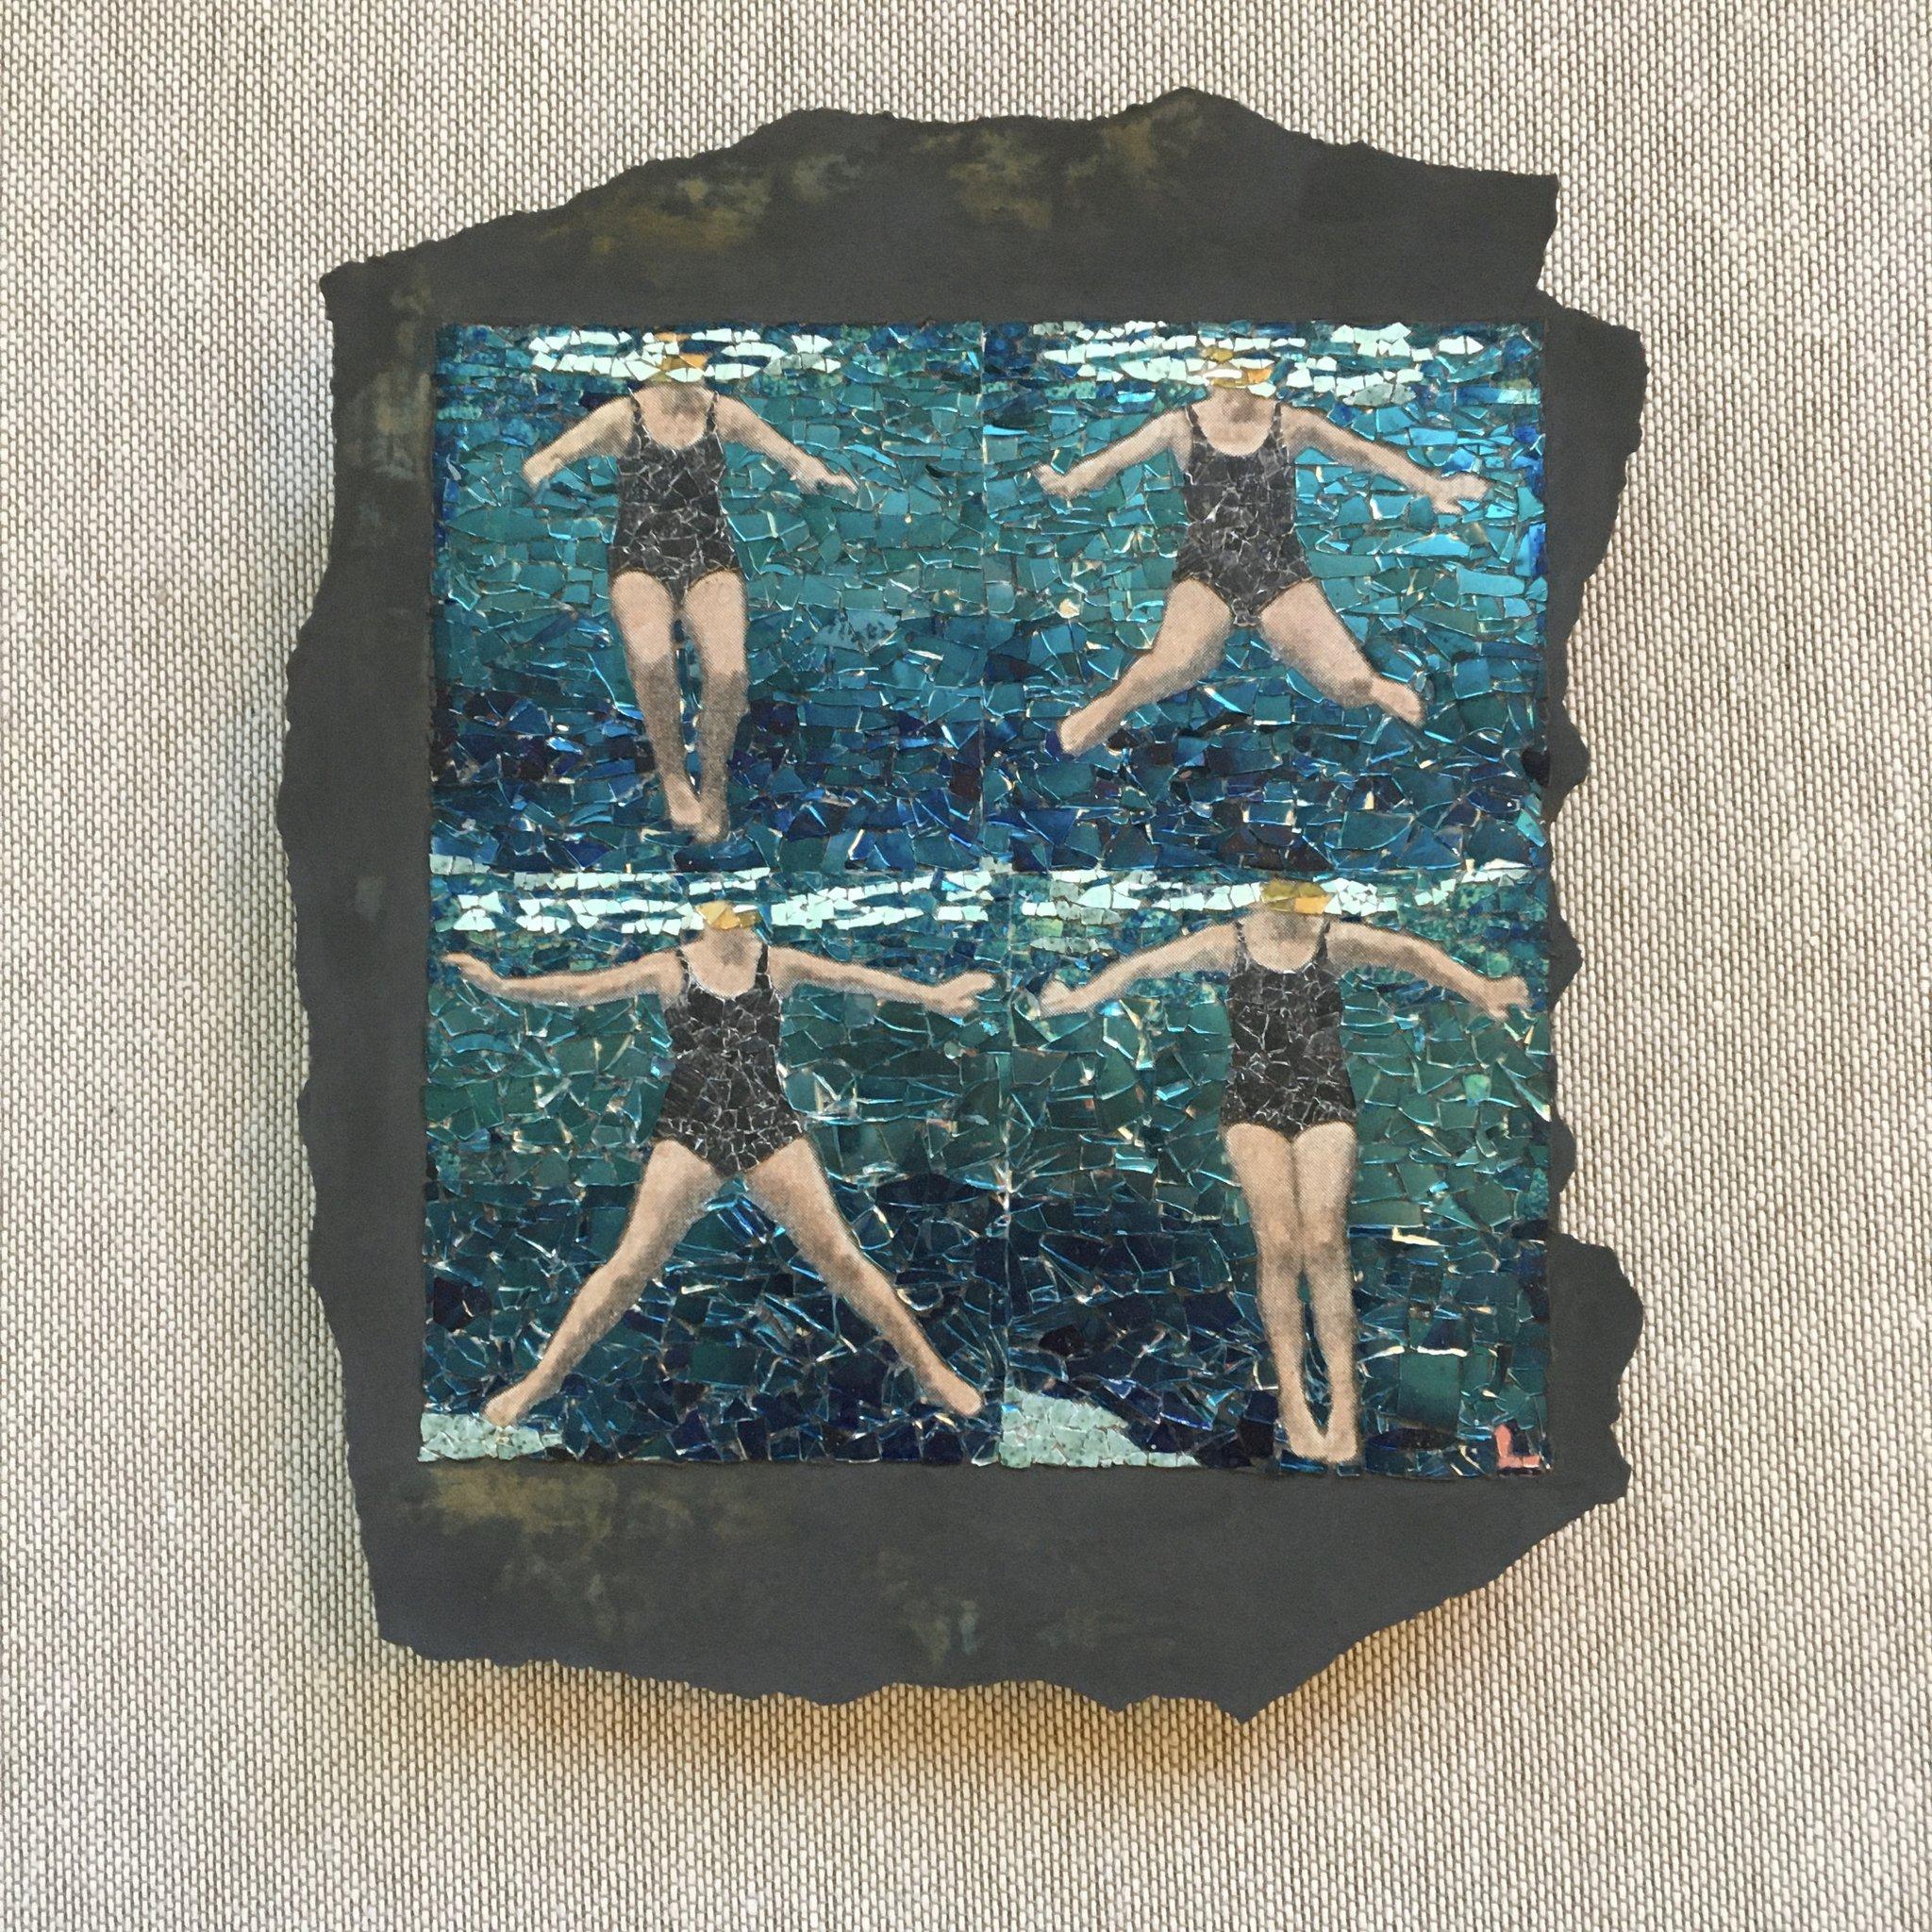 Fig.40. Treading water using breast stroke kick - Painting by Matthew Lazure